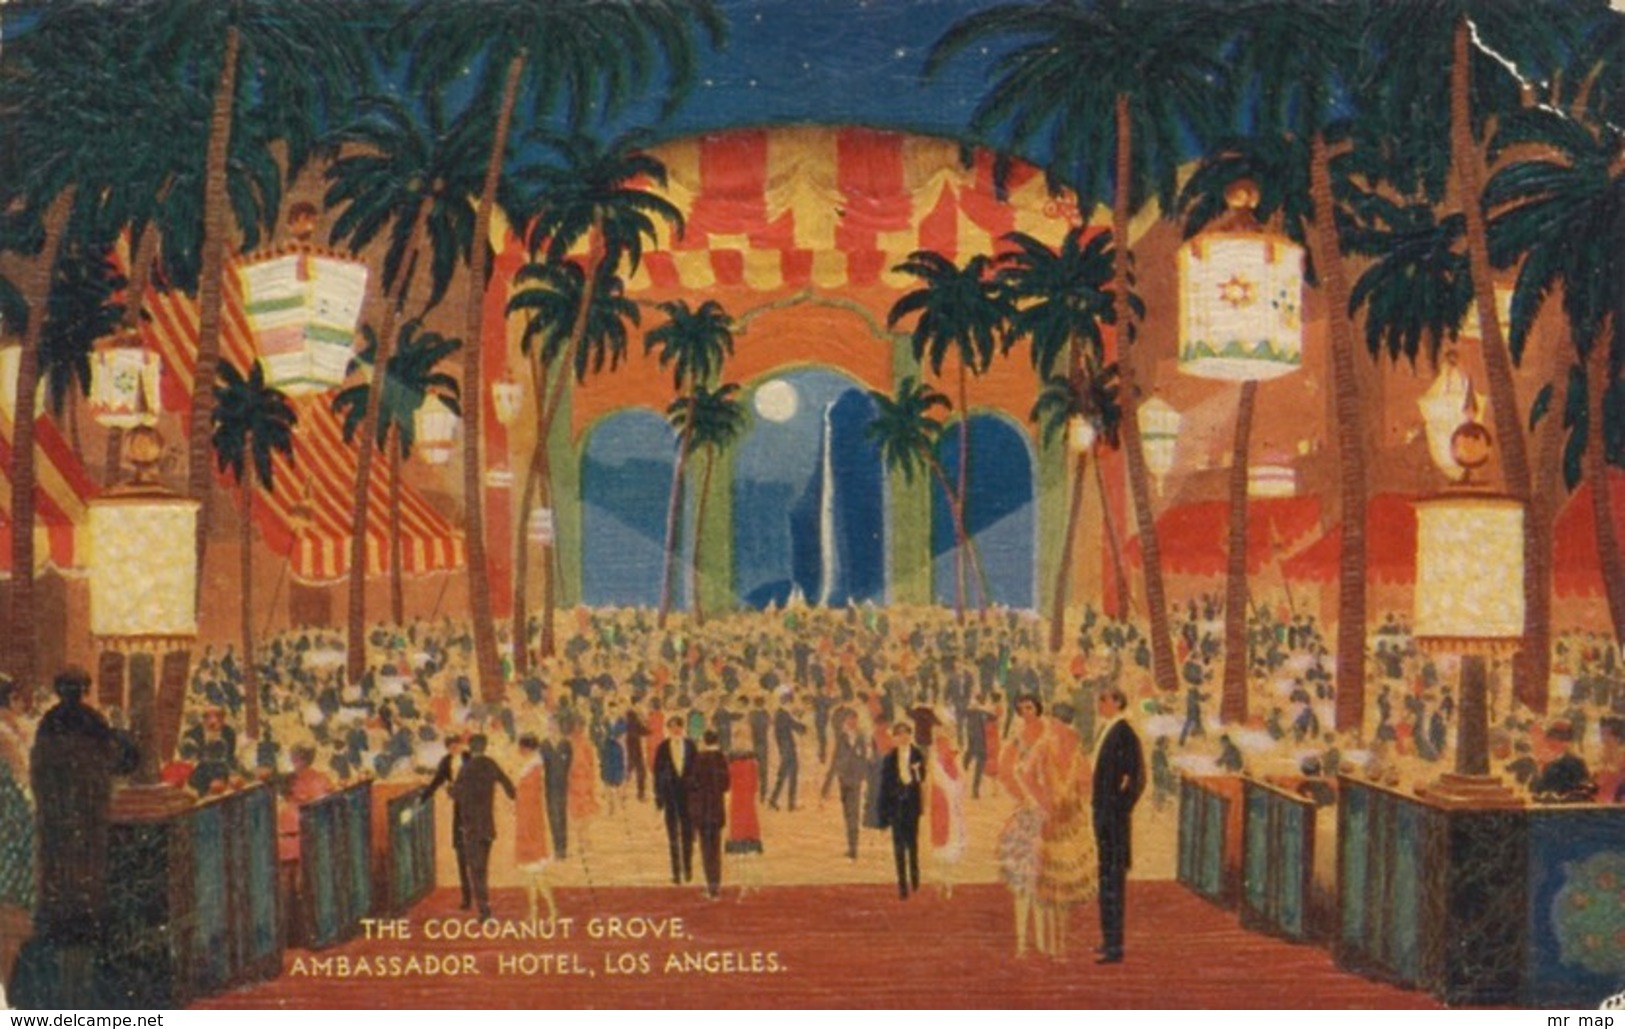 314 - 1931 Los Angeles Ambassador Hotel The Cocoanut Grove - TRAVELLED - Los Angeles